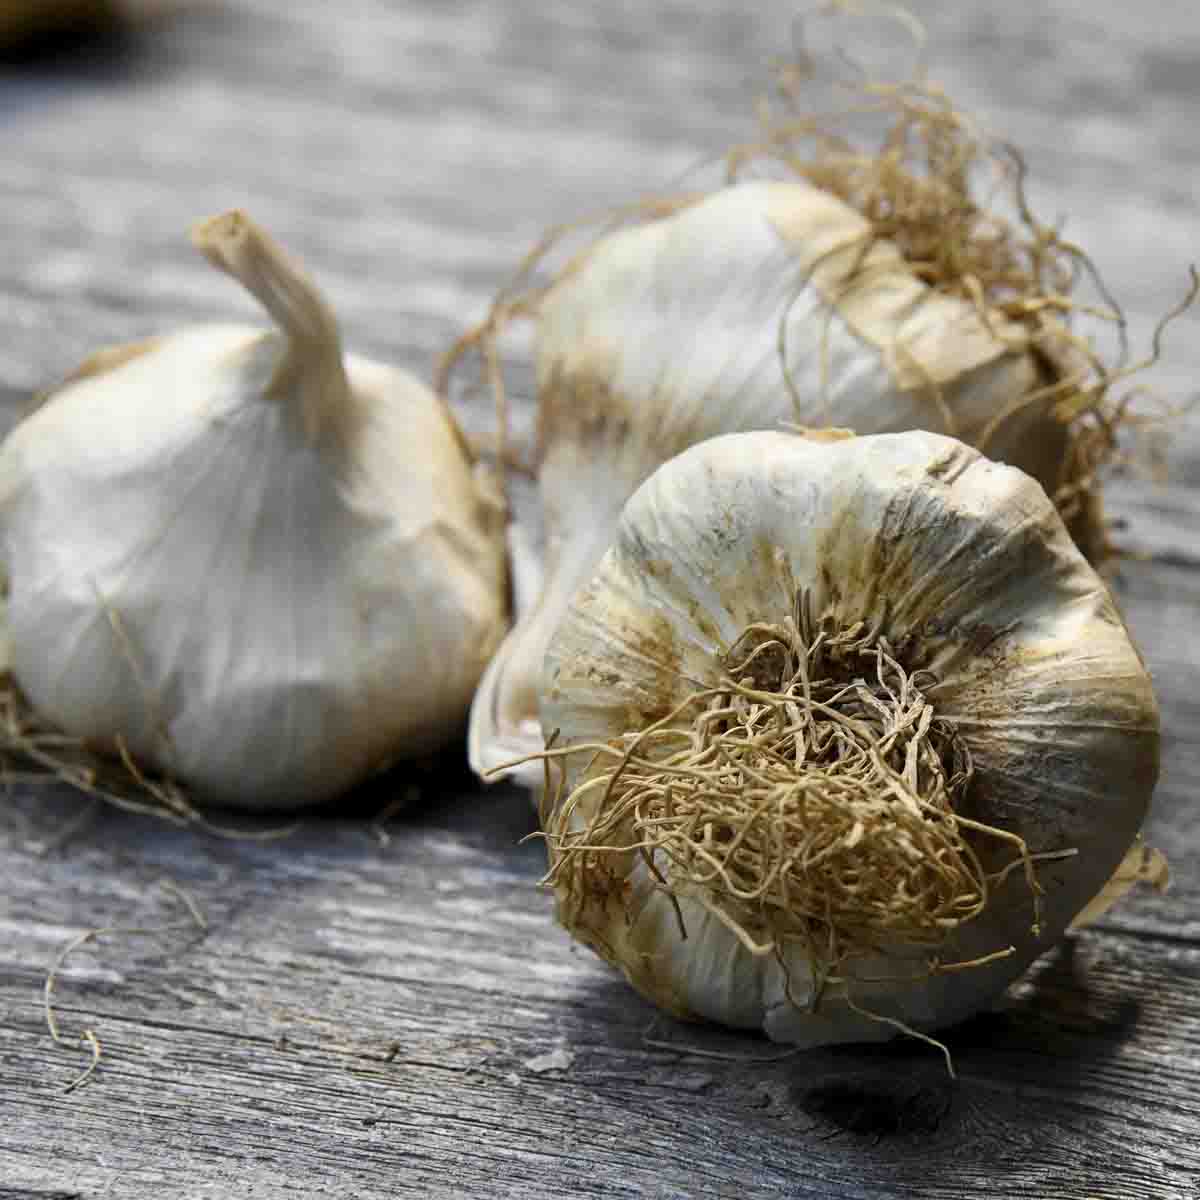 Garlic bulbs on counter.